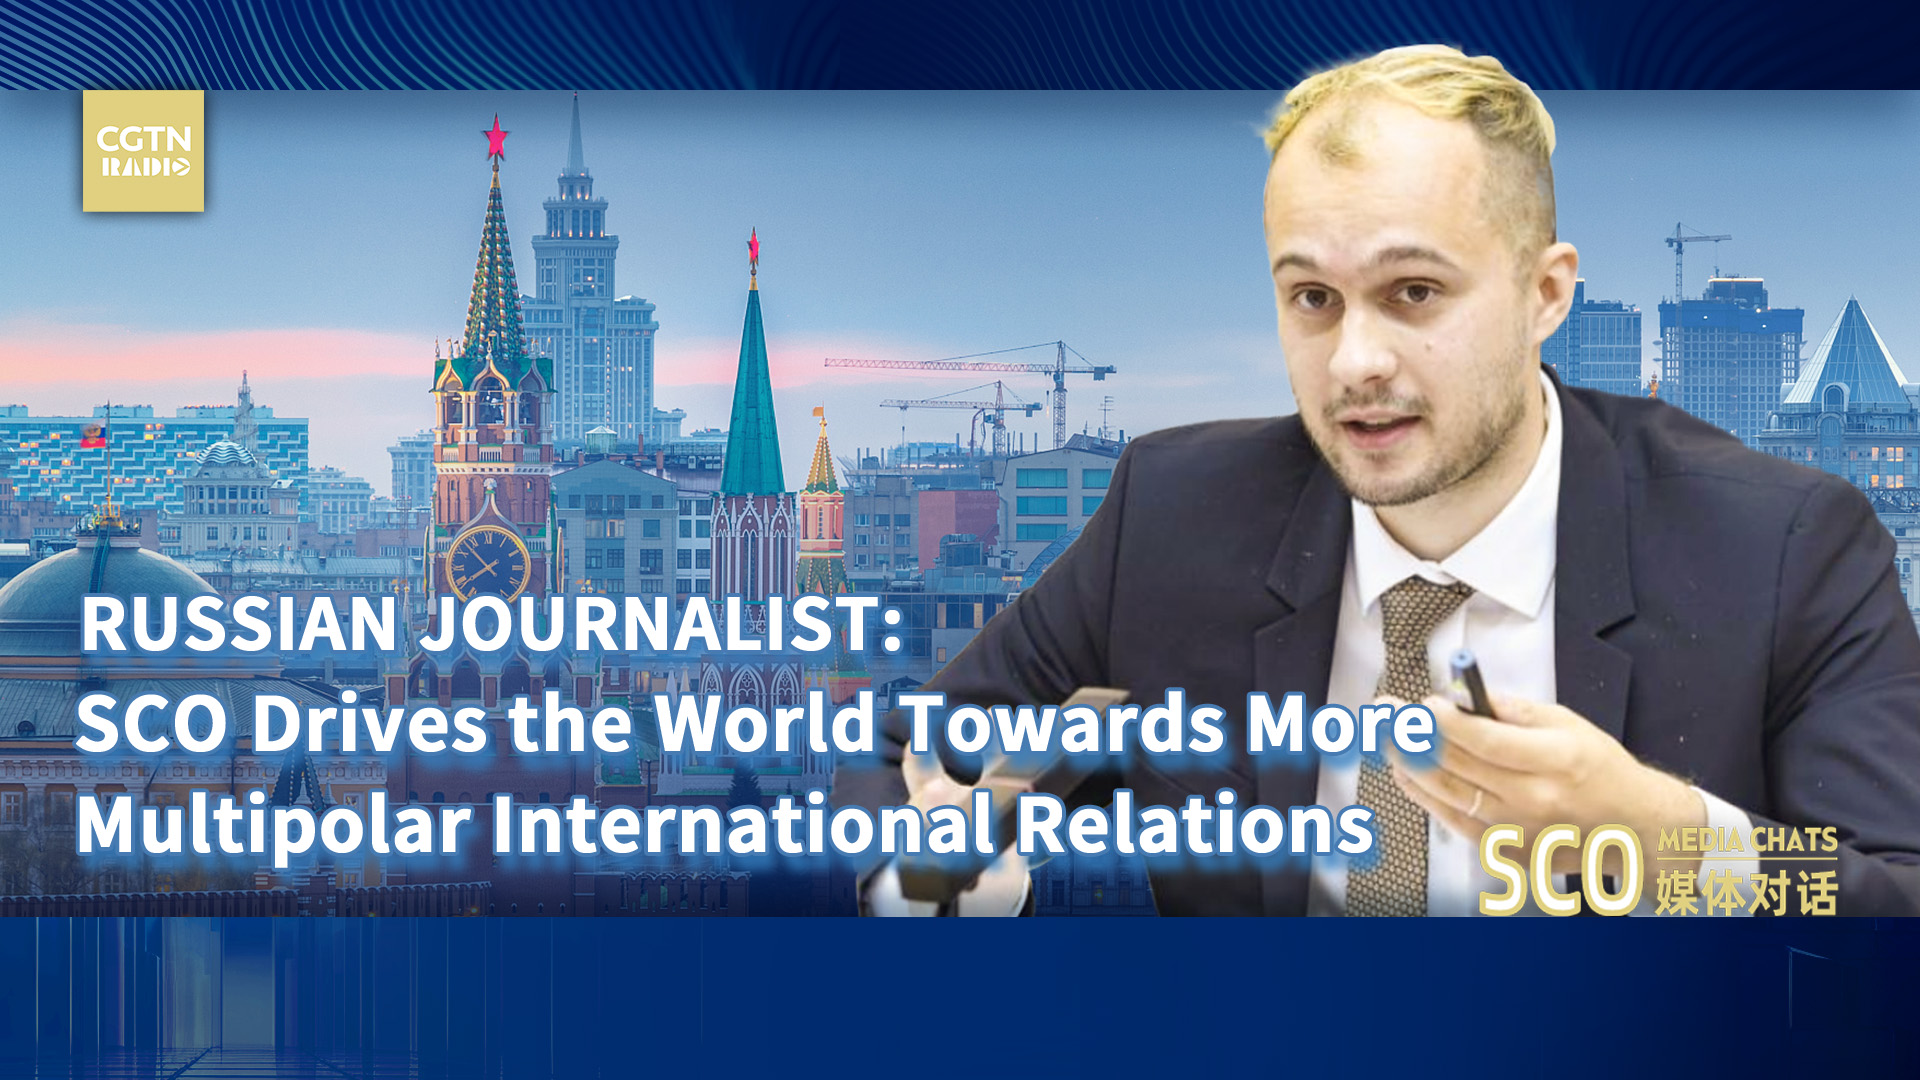 Russian journalist: SCO drives world toward multipolar relations